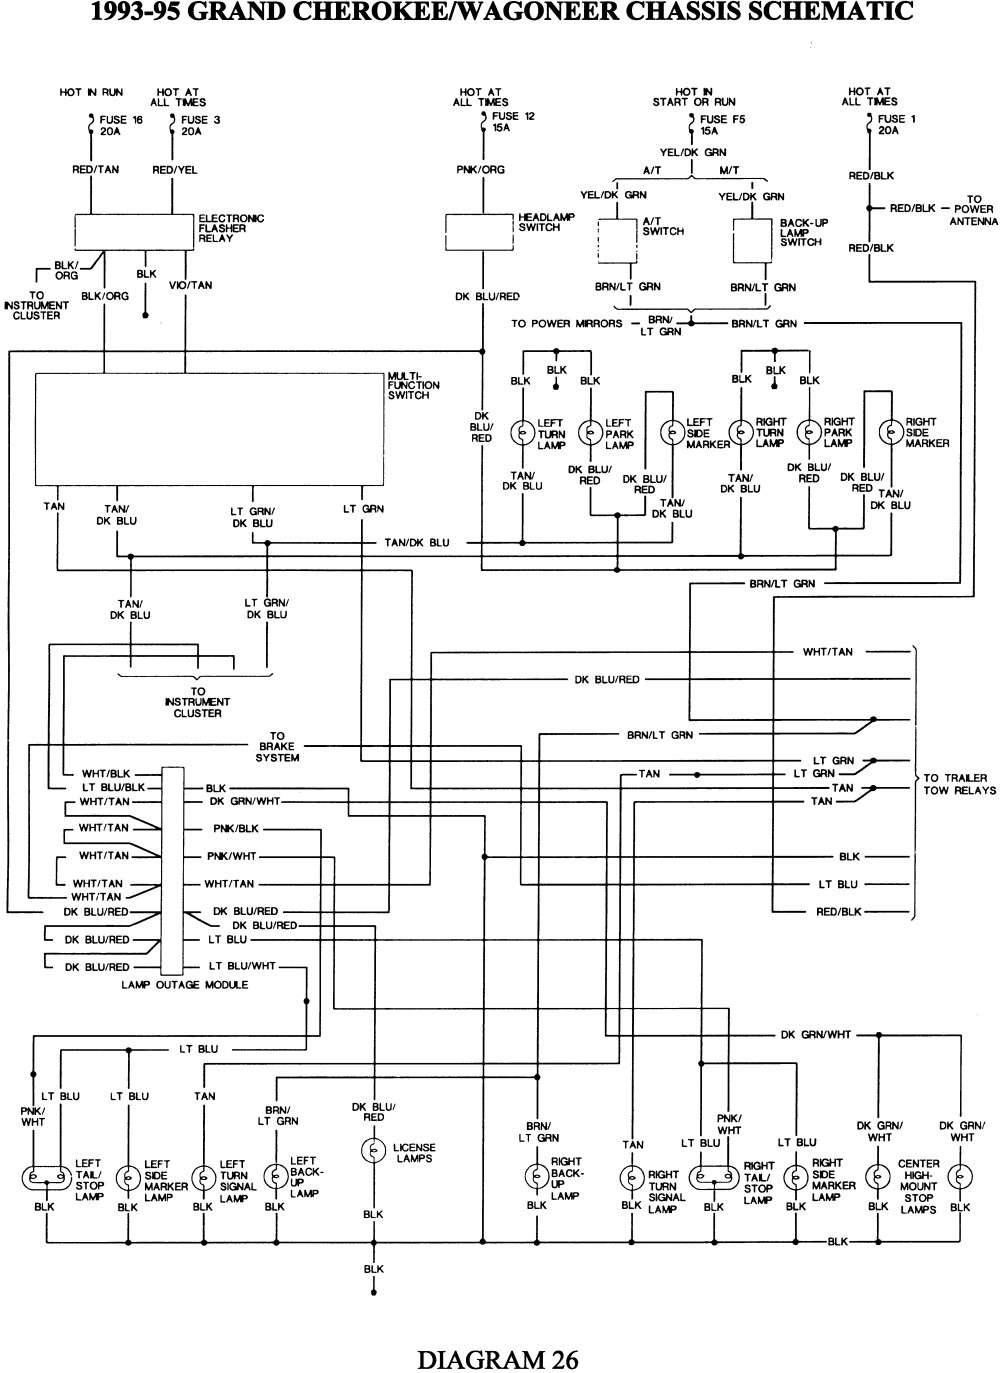 wj jeep tail light wiring diagram enthusiast wiring diagrams u2022 rh rasalibre co 2002 Jeep Grand Cherokee Wiring Diagram 1998 Jeep Grand Cherokee Wiring